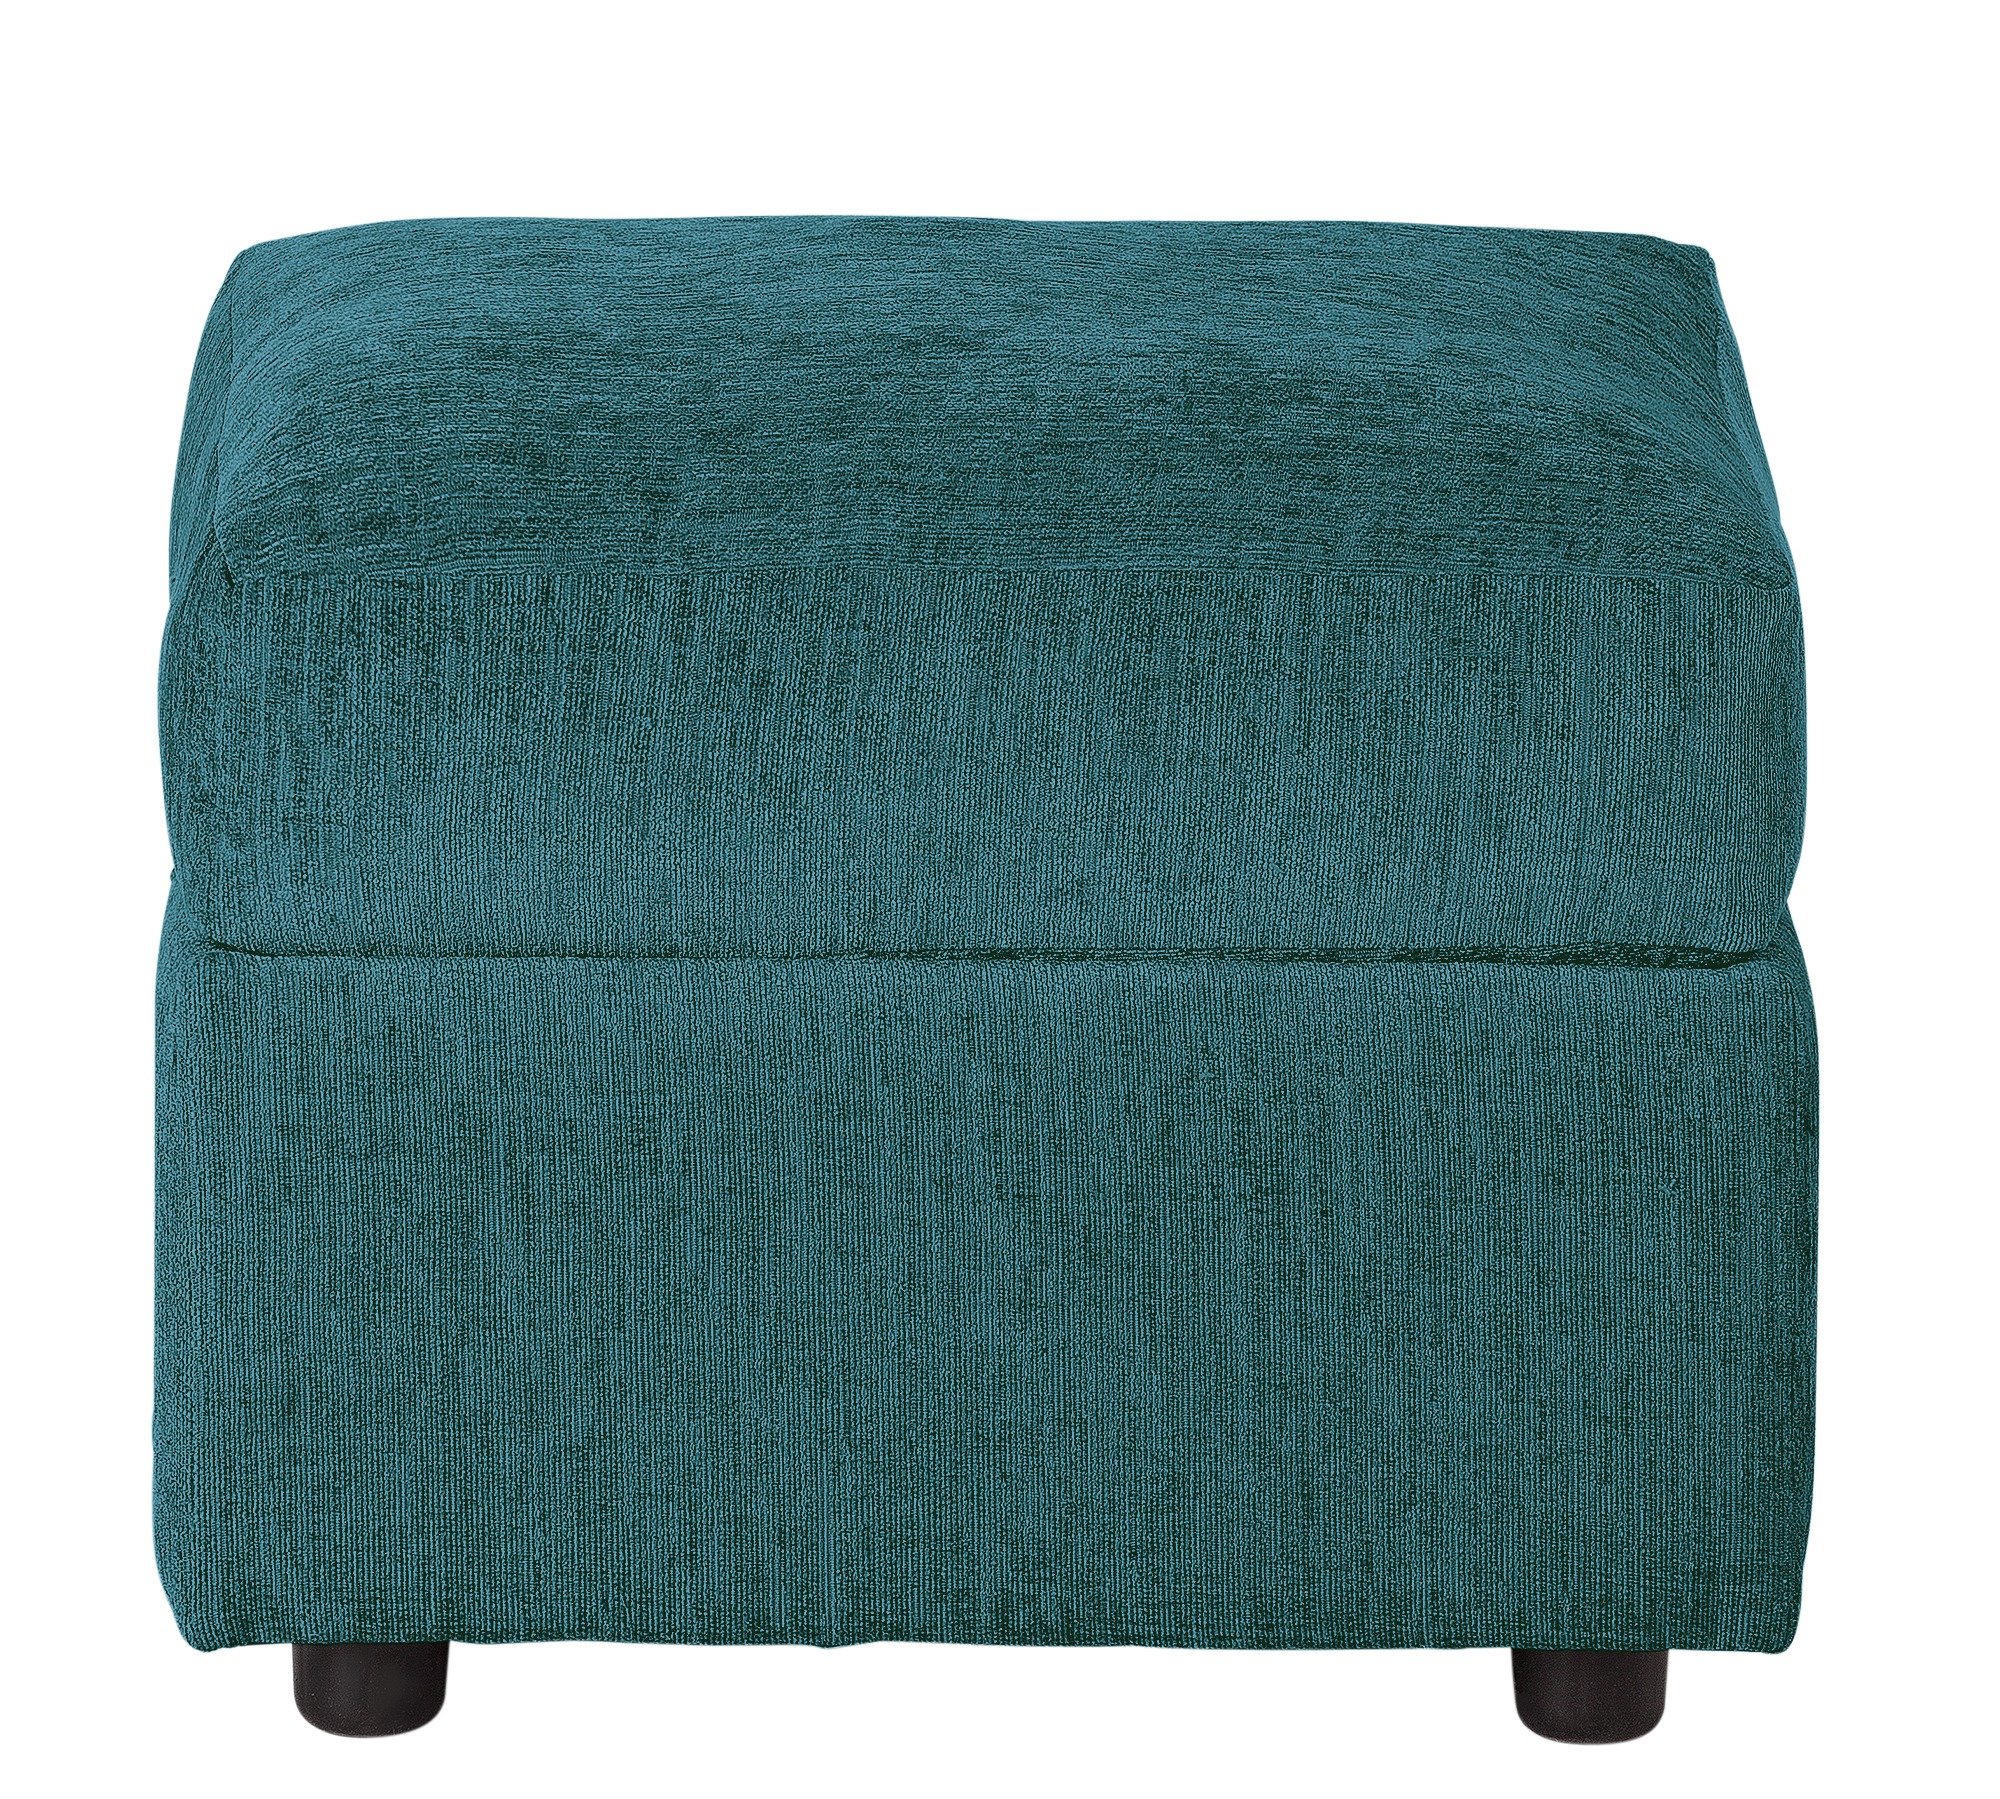 Argos Home Tessa Fabric Storage Footstool - Teal